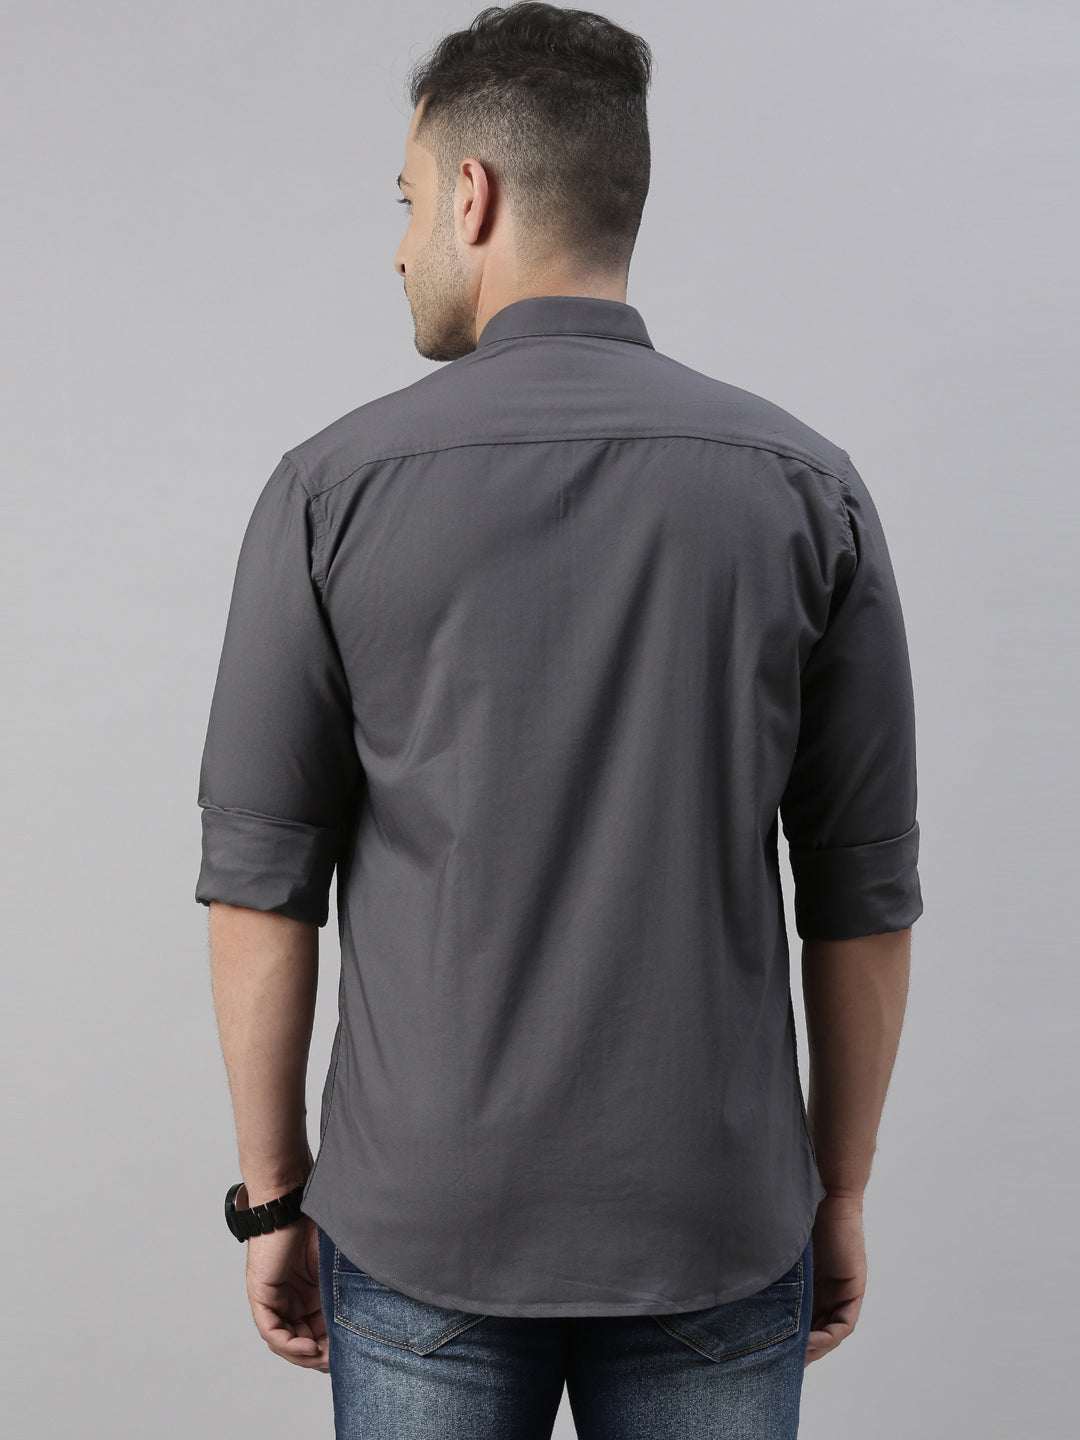 Steel Grey Chinese Collar Casual Shirt Solid Shirt Bushirt   